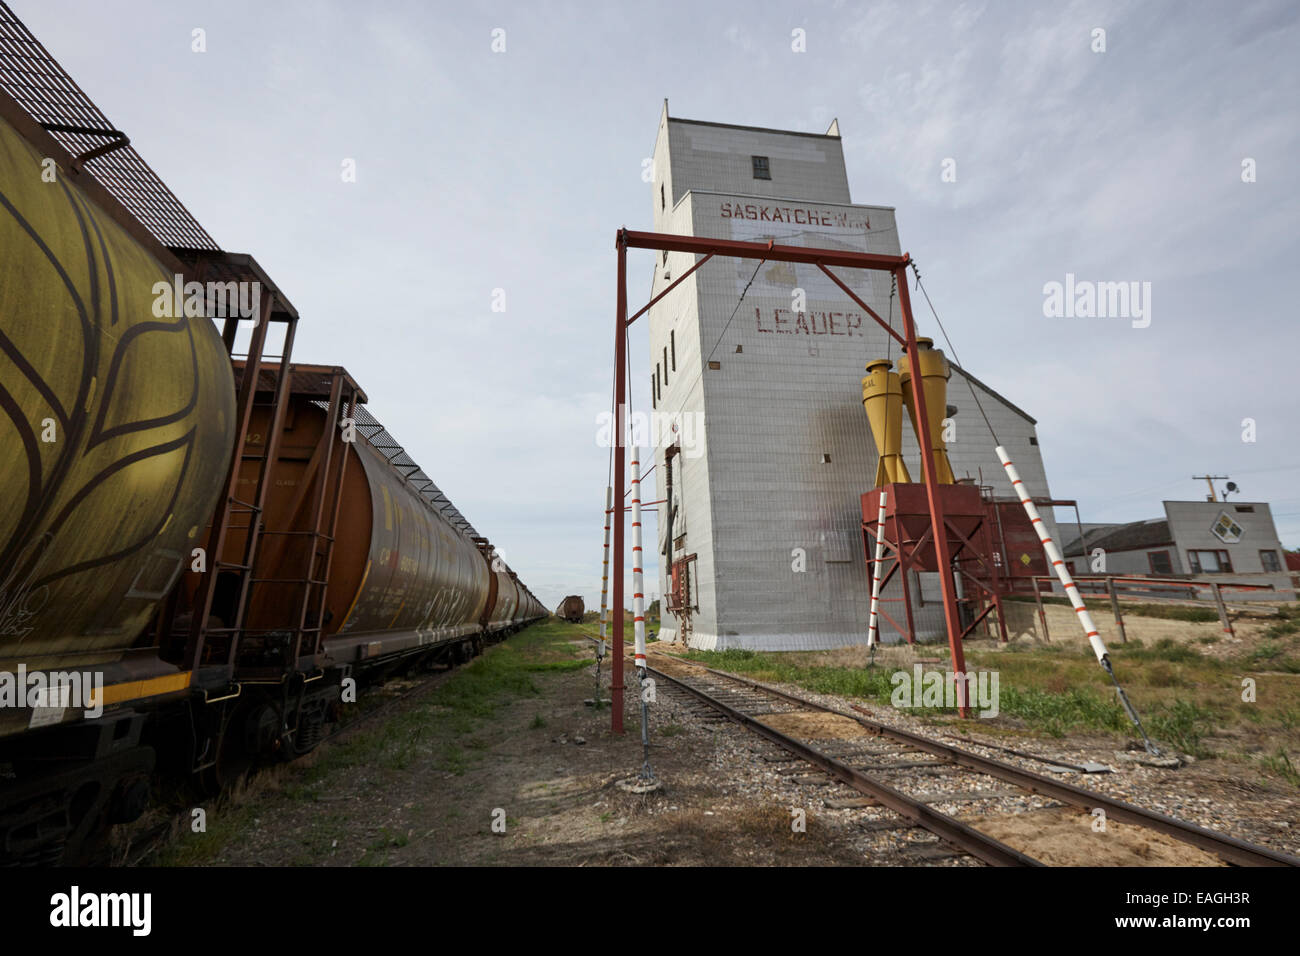 grain elevator and old train track with grain railcars leader Saskatchewan Canada Stock Photo